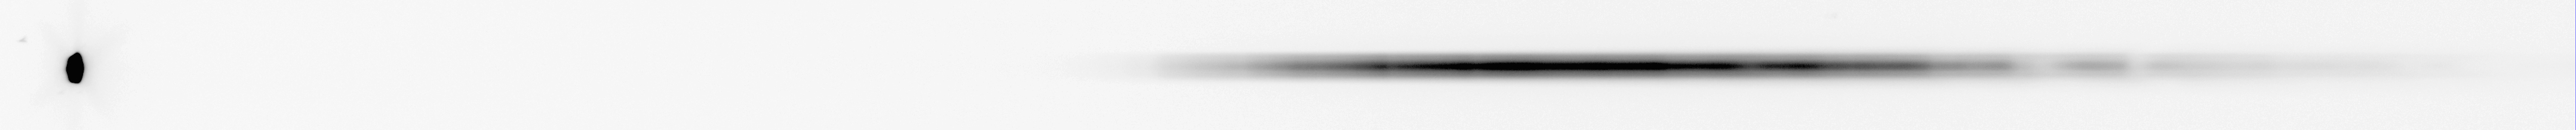 Saturn_spectra.jpg